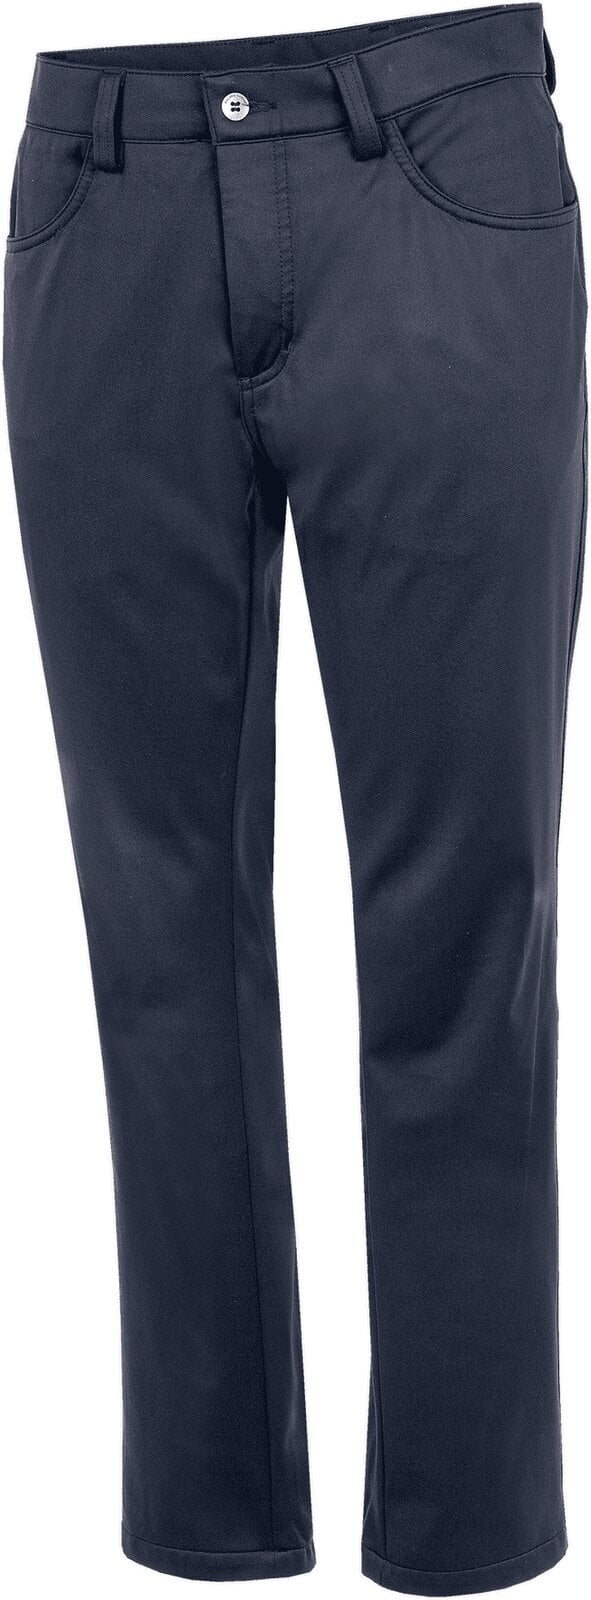 Pantaloni Galvin Green Lane MensWindproof And Water Repellent Pants Navy 32/32